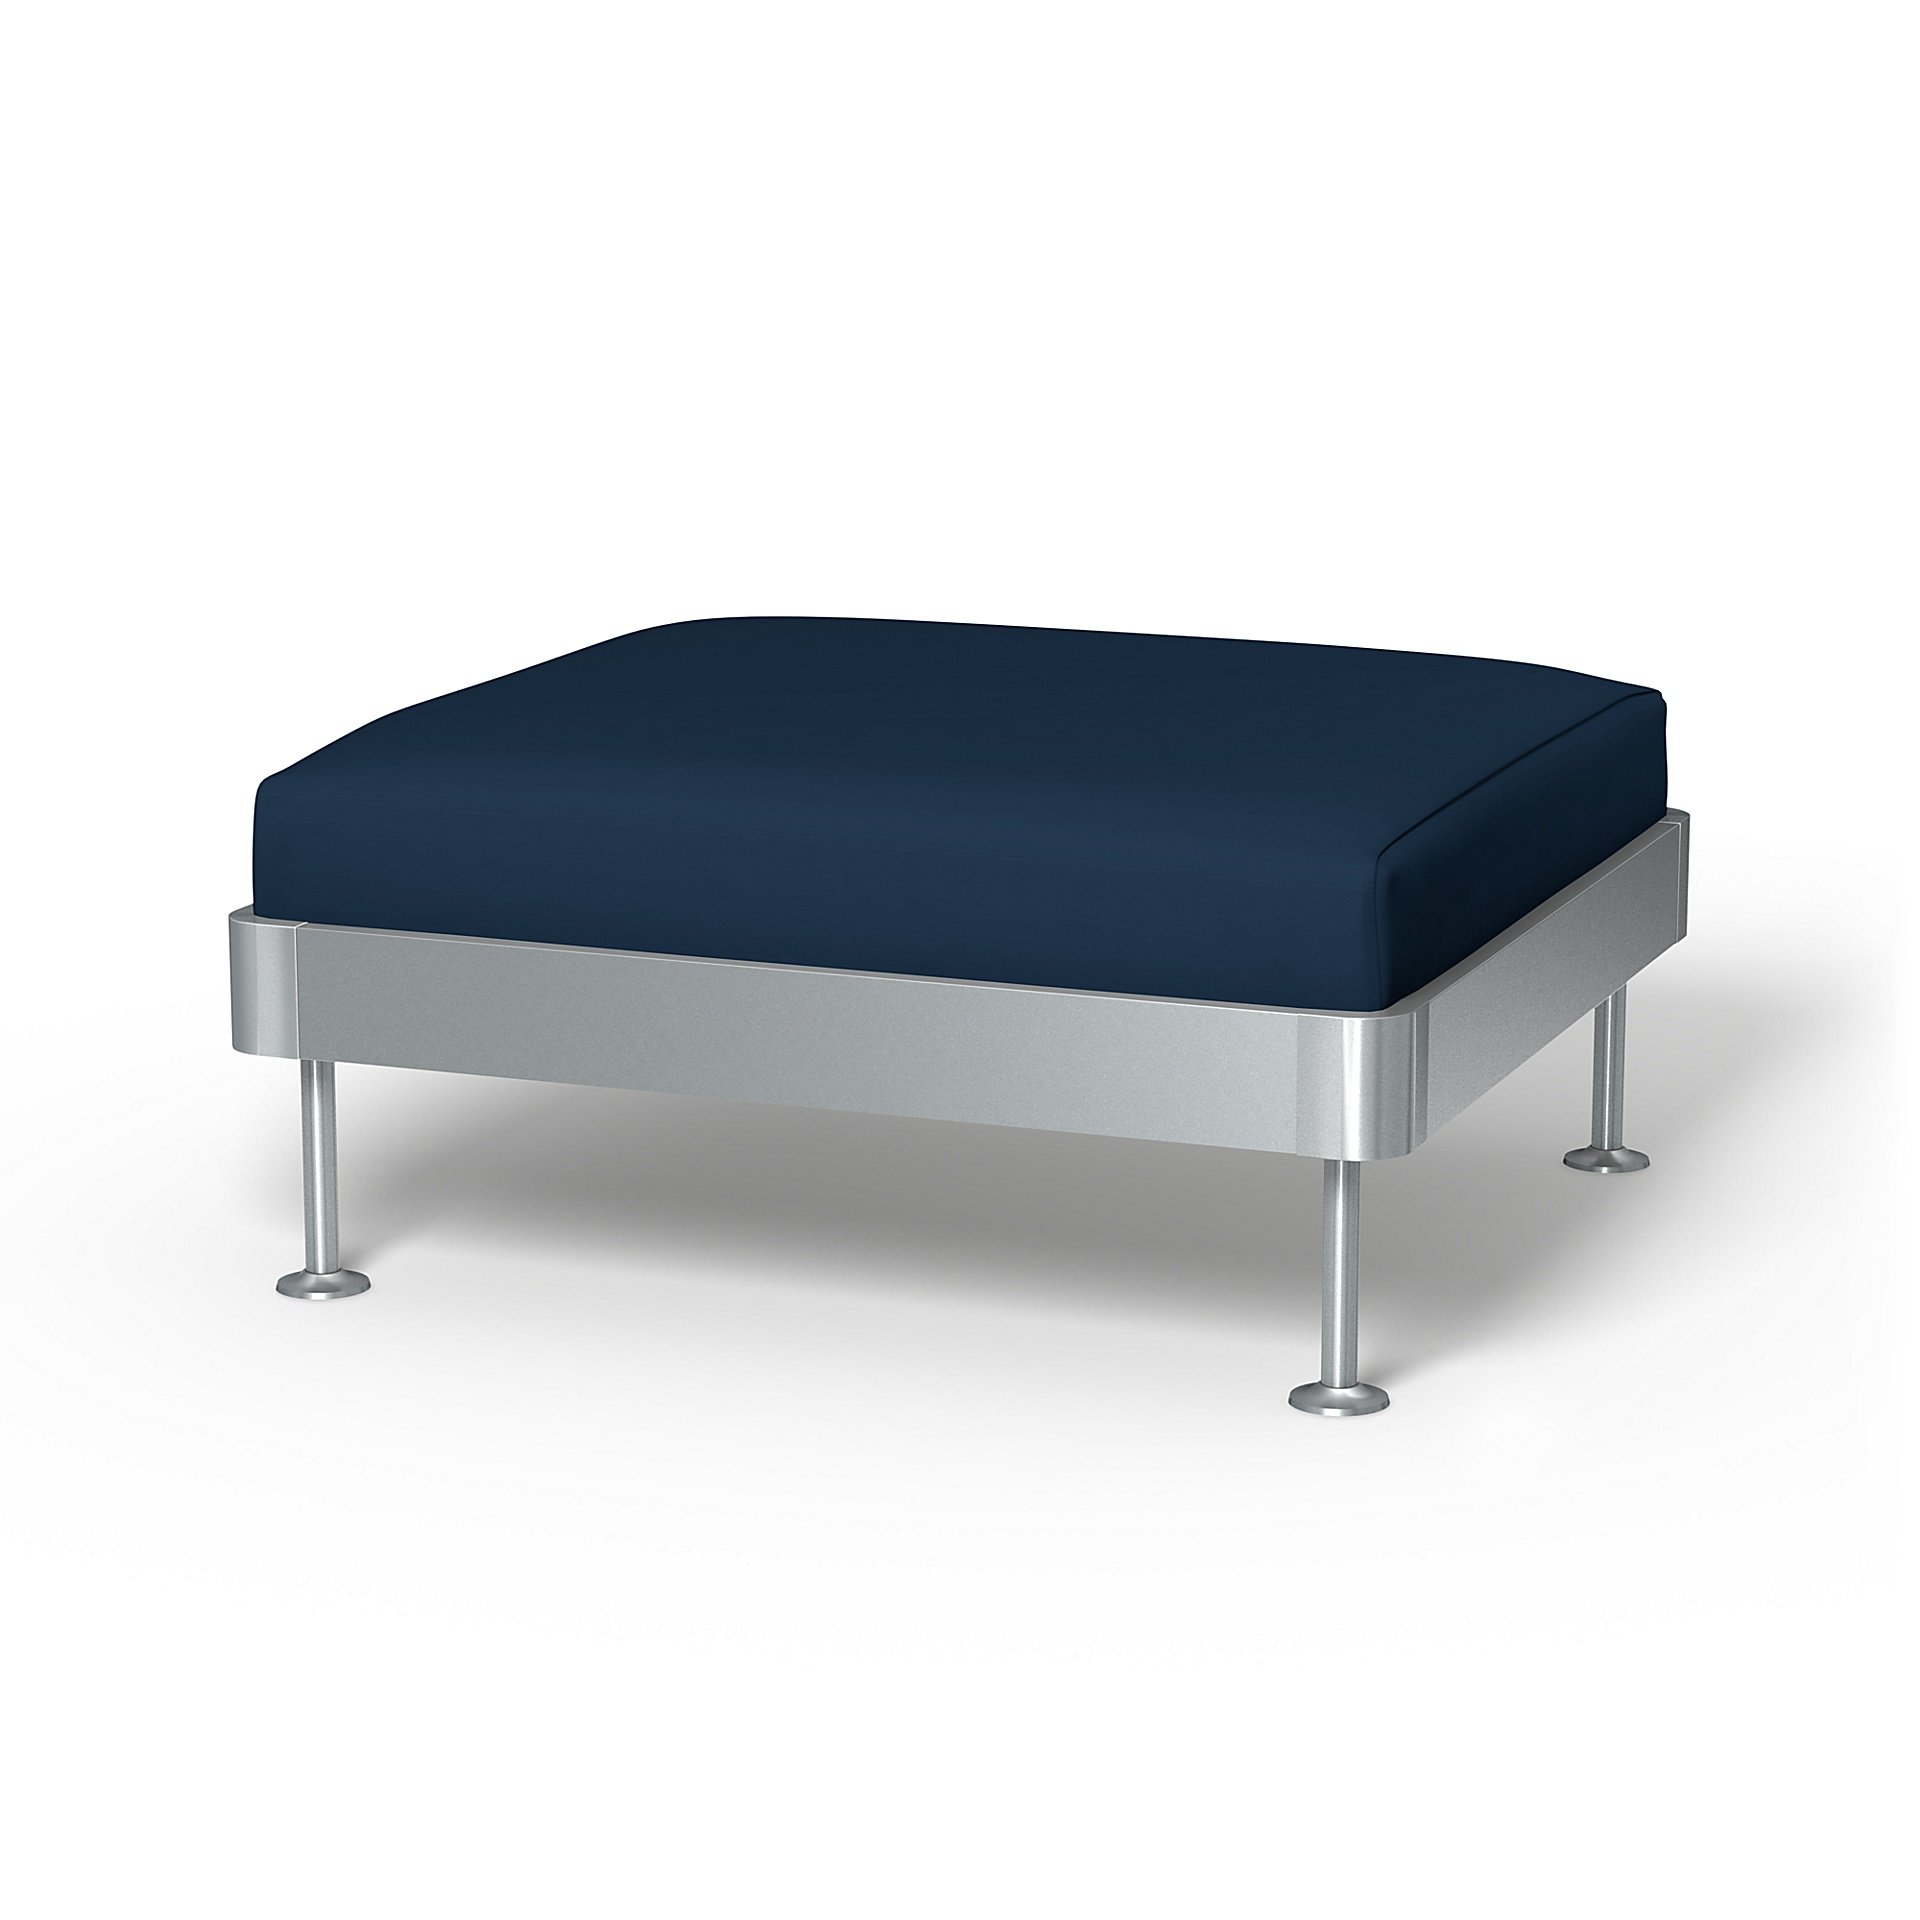 IKEA - Delaktig 1 Seat Platform Cover, Deep Navy Blue, Cotton - Bemz